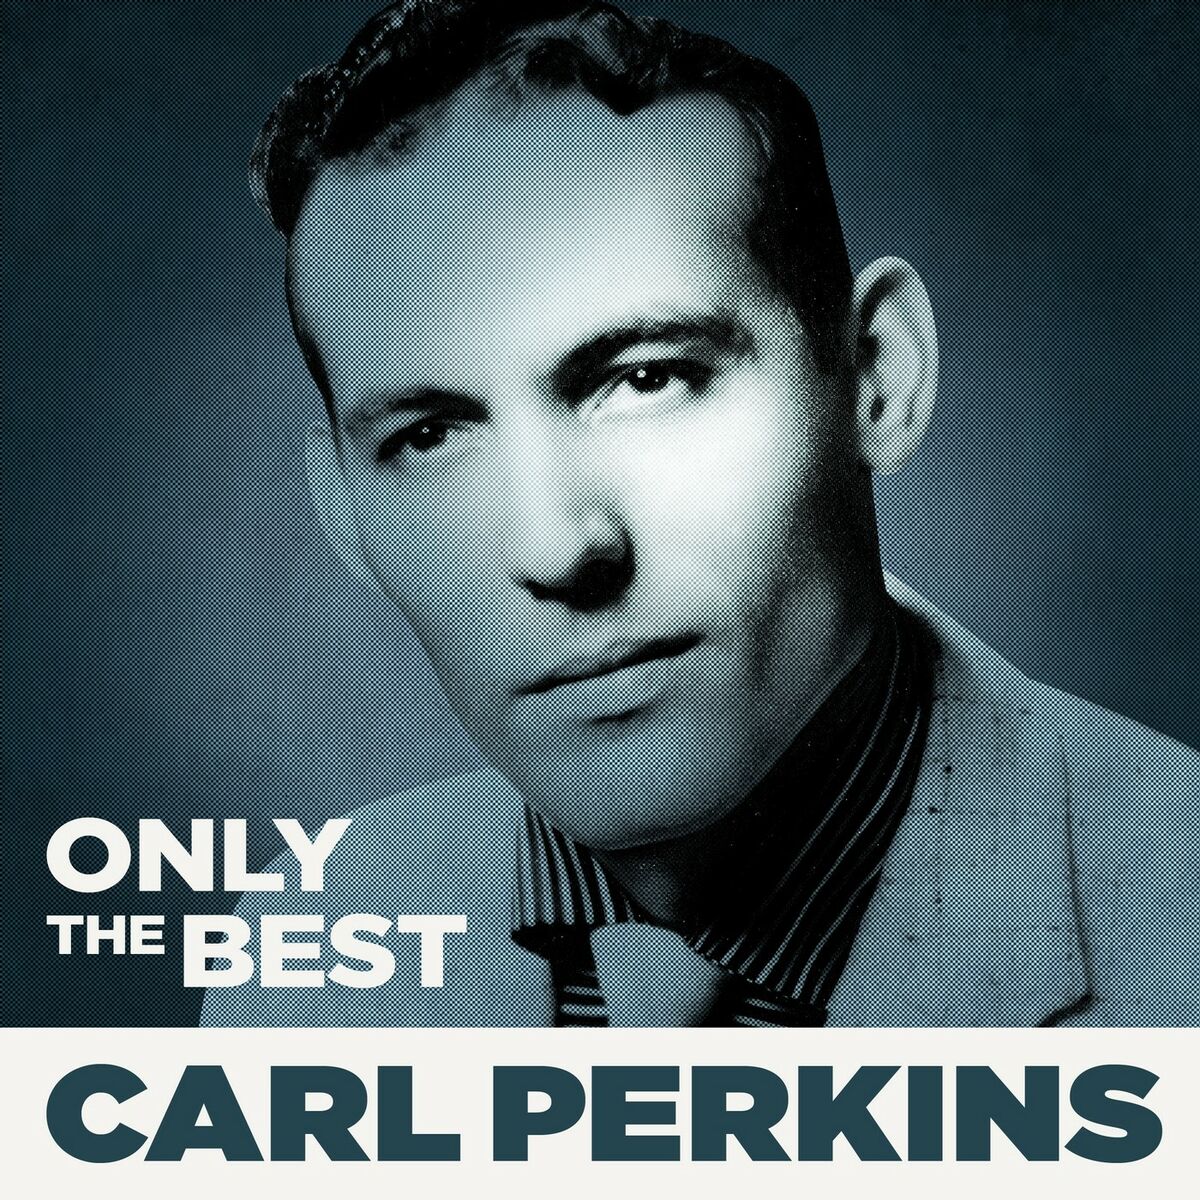 Carl Perkins: albums